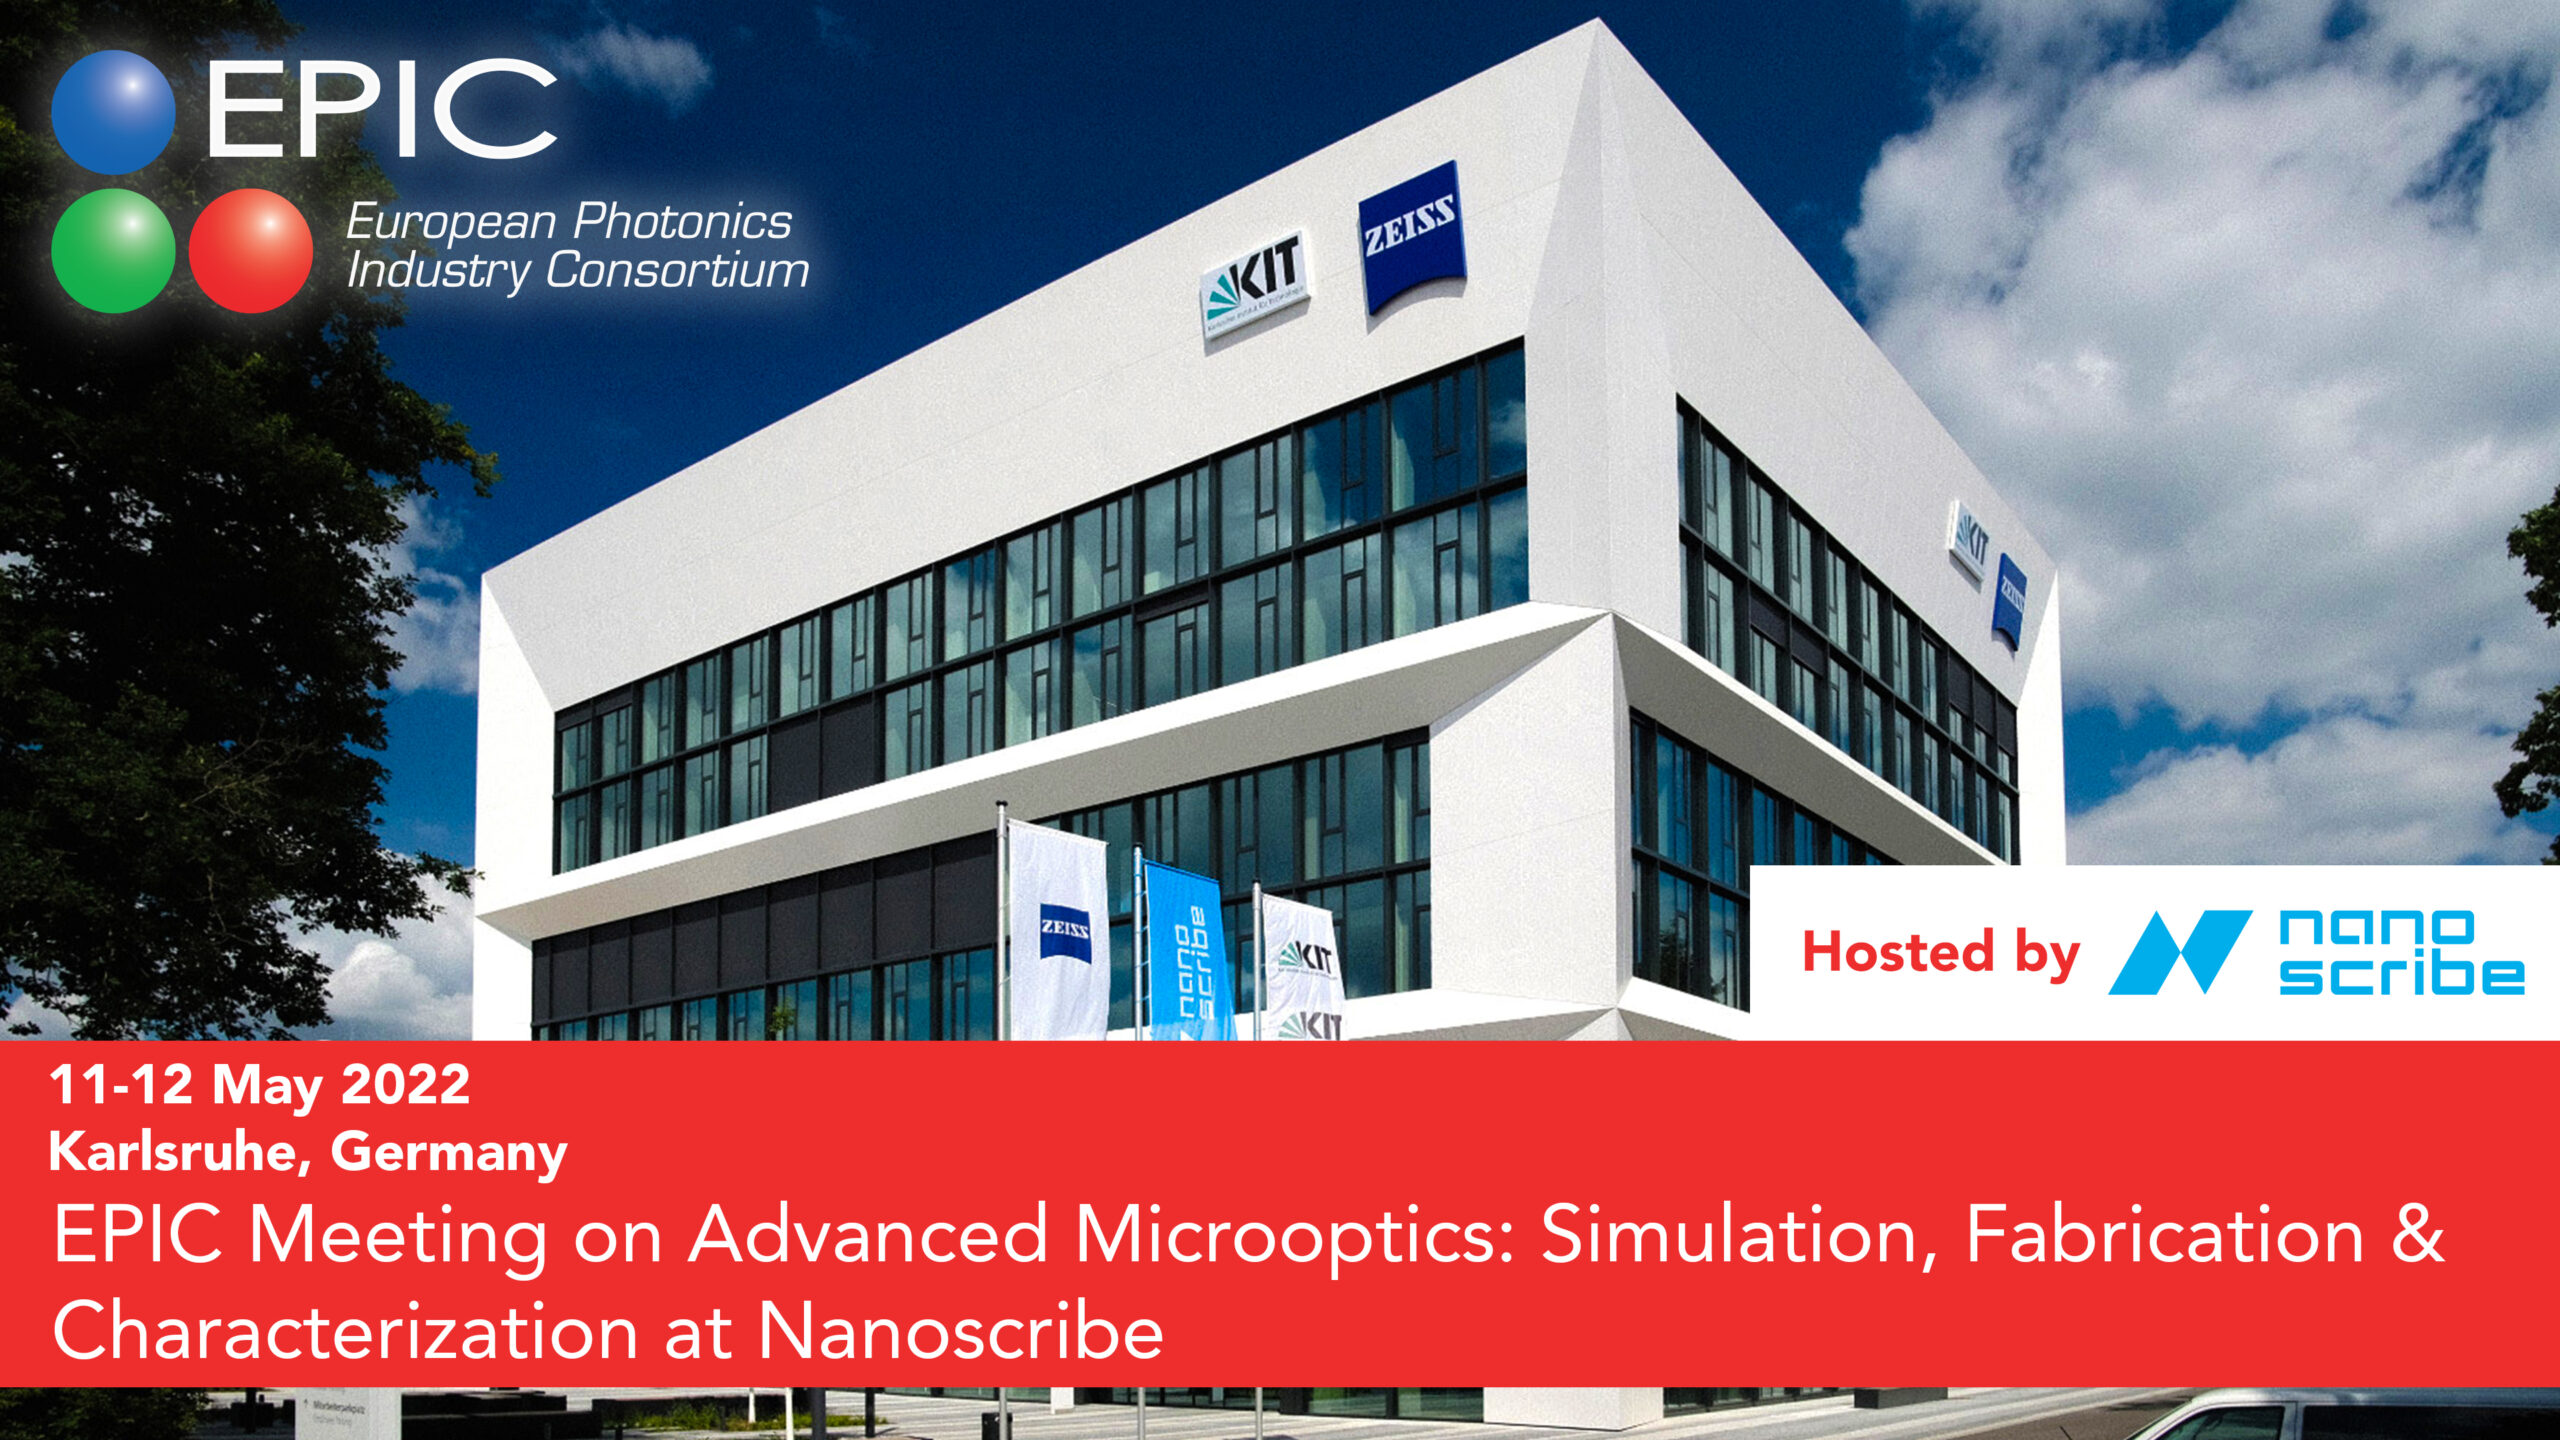 EPIC Meeting on Advanced Microoptics: Simulation, Fabrication & Characterization at Nanoscribe